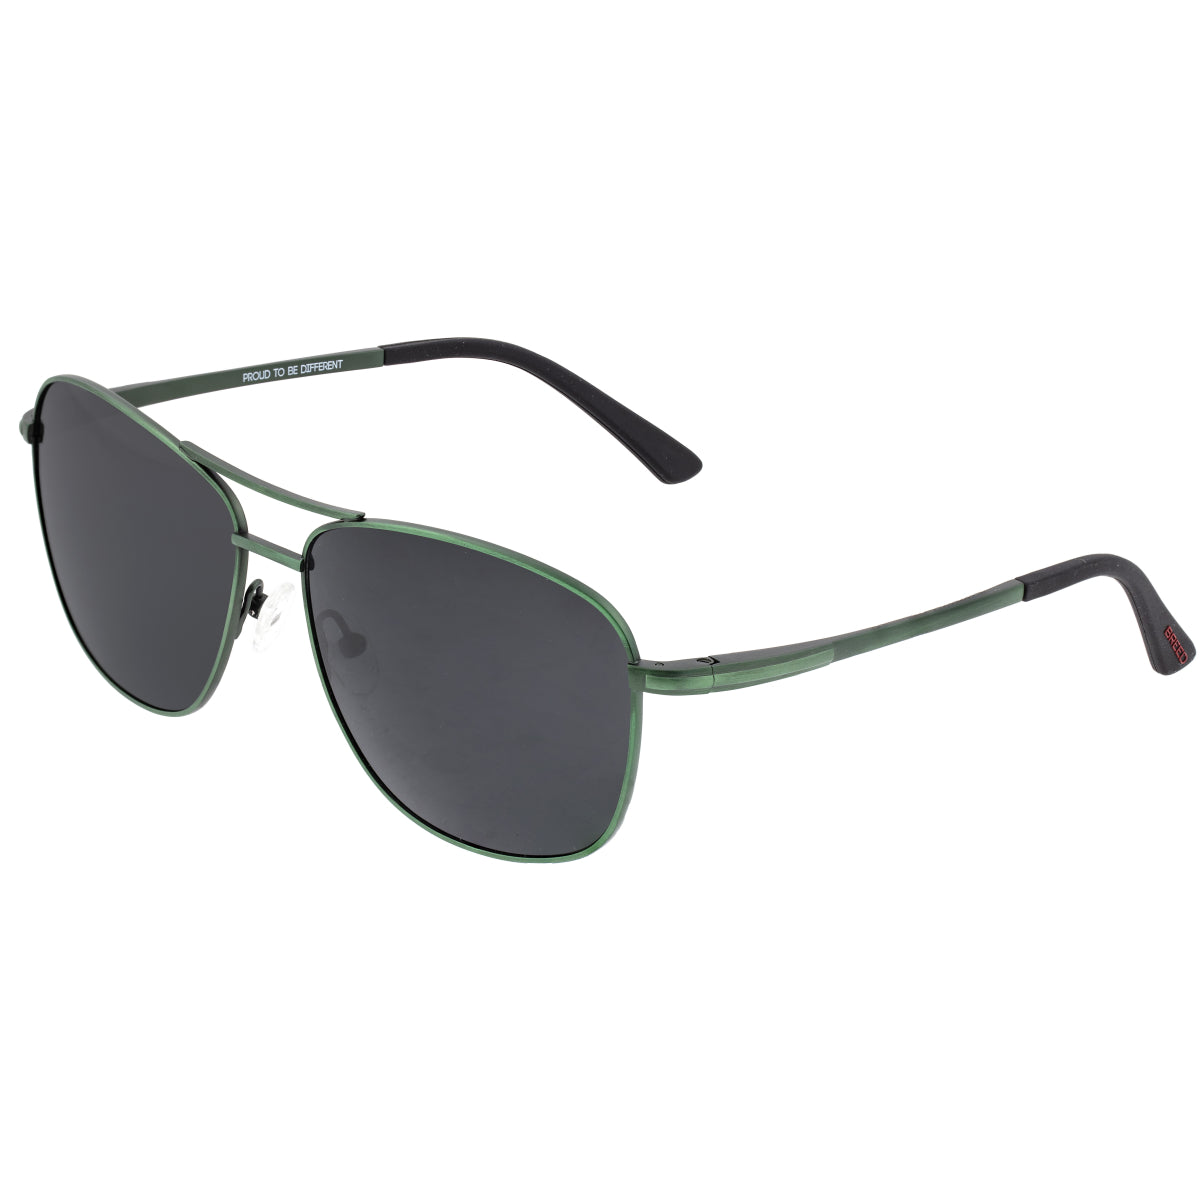 Breed Hera Titanium Polarized Sunglasses - Green/Black - BSG054GN